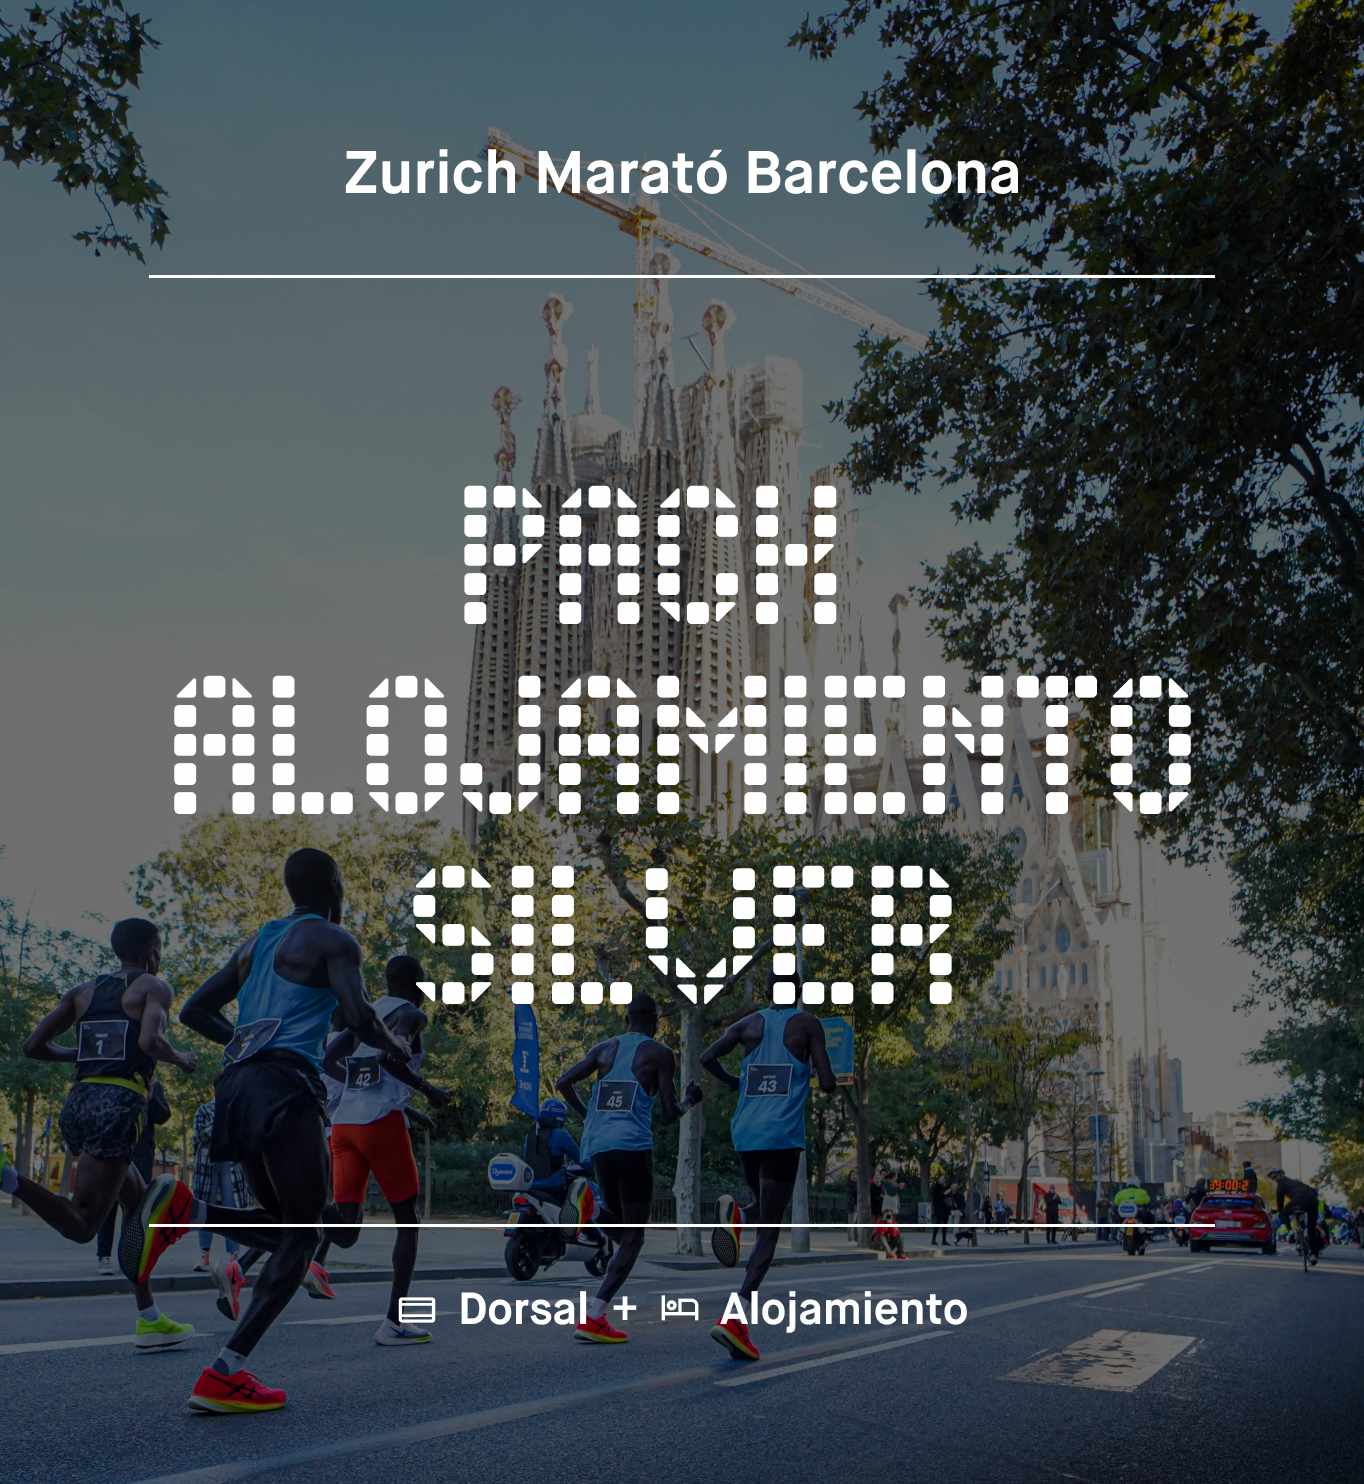 Zurich Marato Barcelona alojamiento + dorsal pack